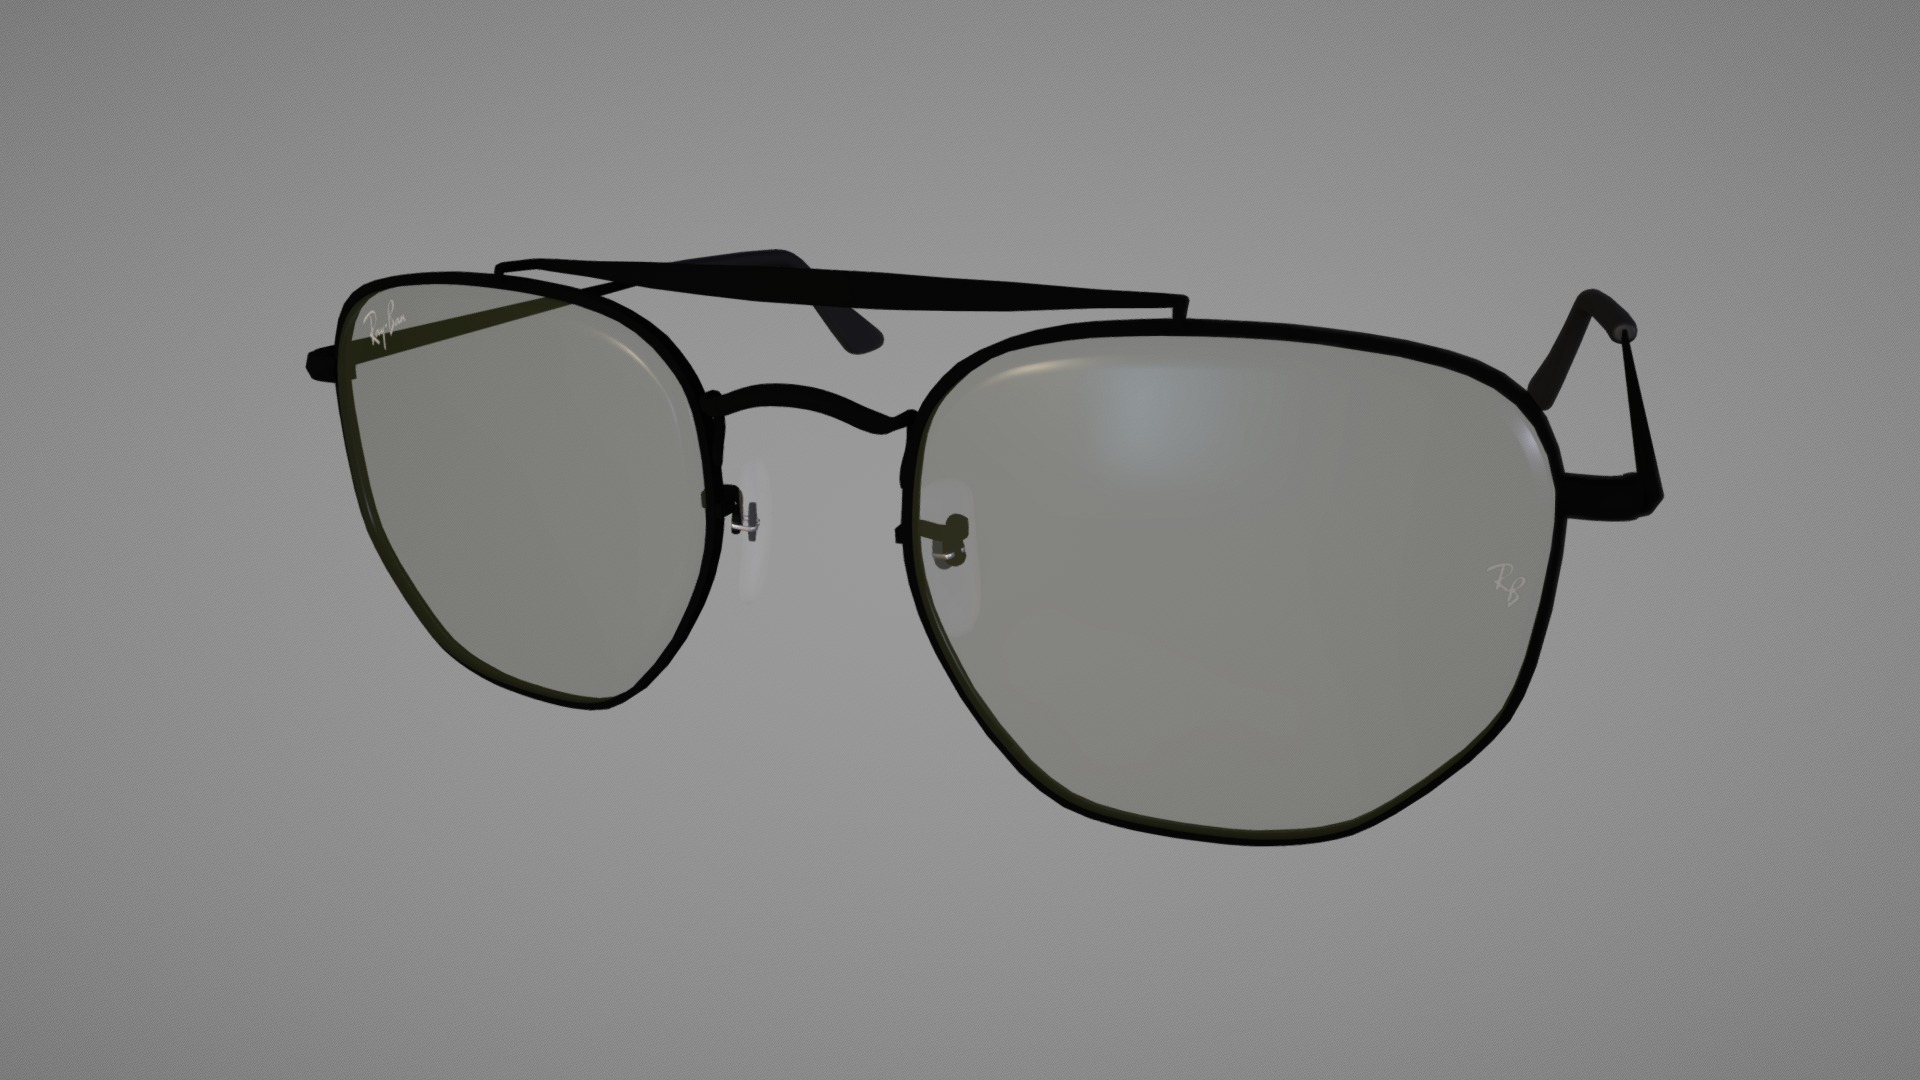 3D model Ray-Ban Marshal 2 Black Green Classic - This is a 3D model of the Ray-Ban Marshal 2 Black Green Classic. The 3D model is about a pair of glasses.